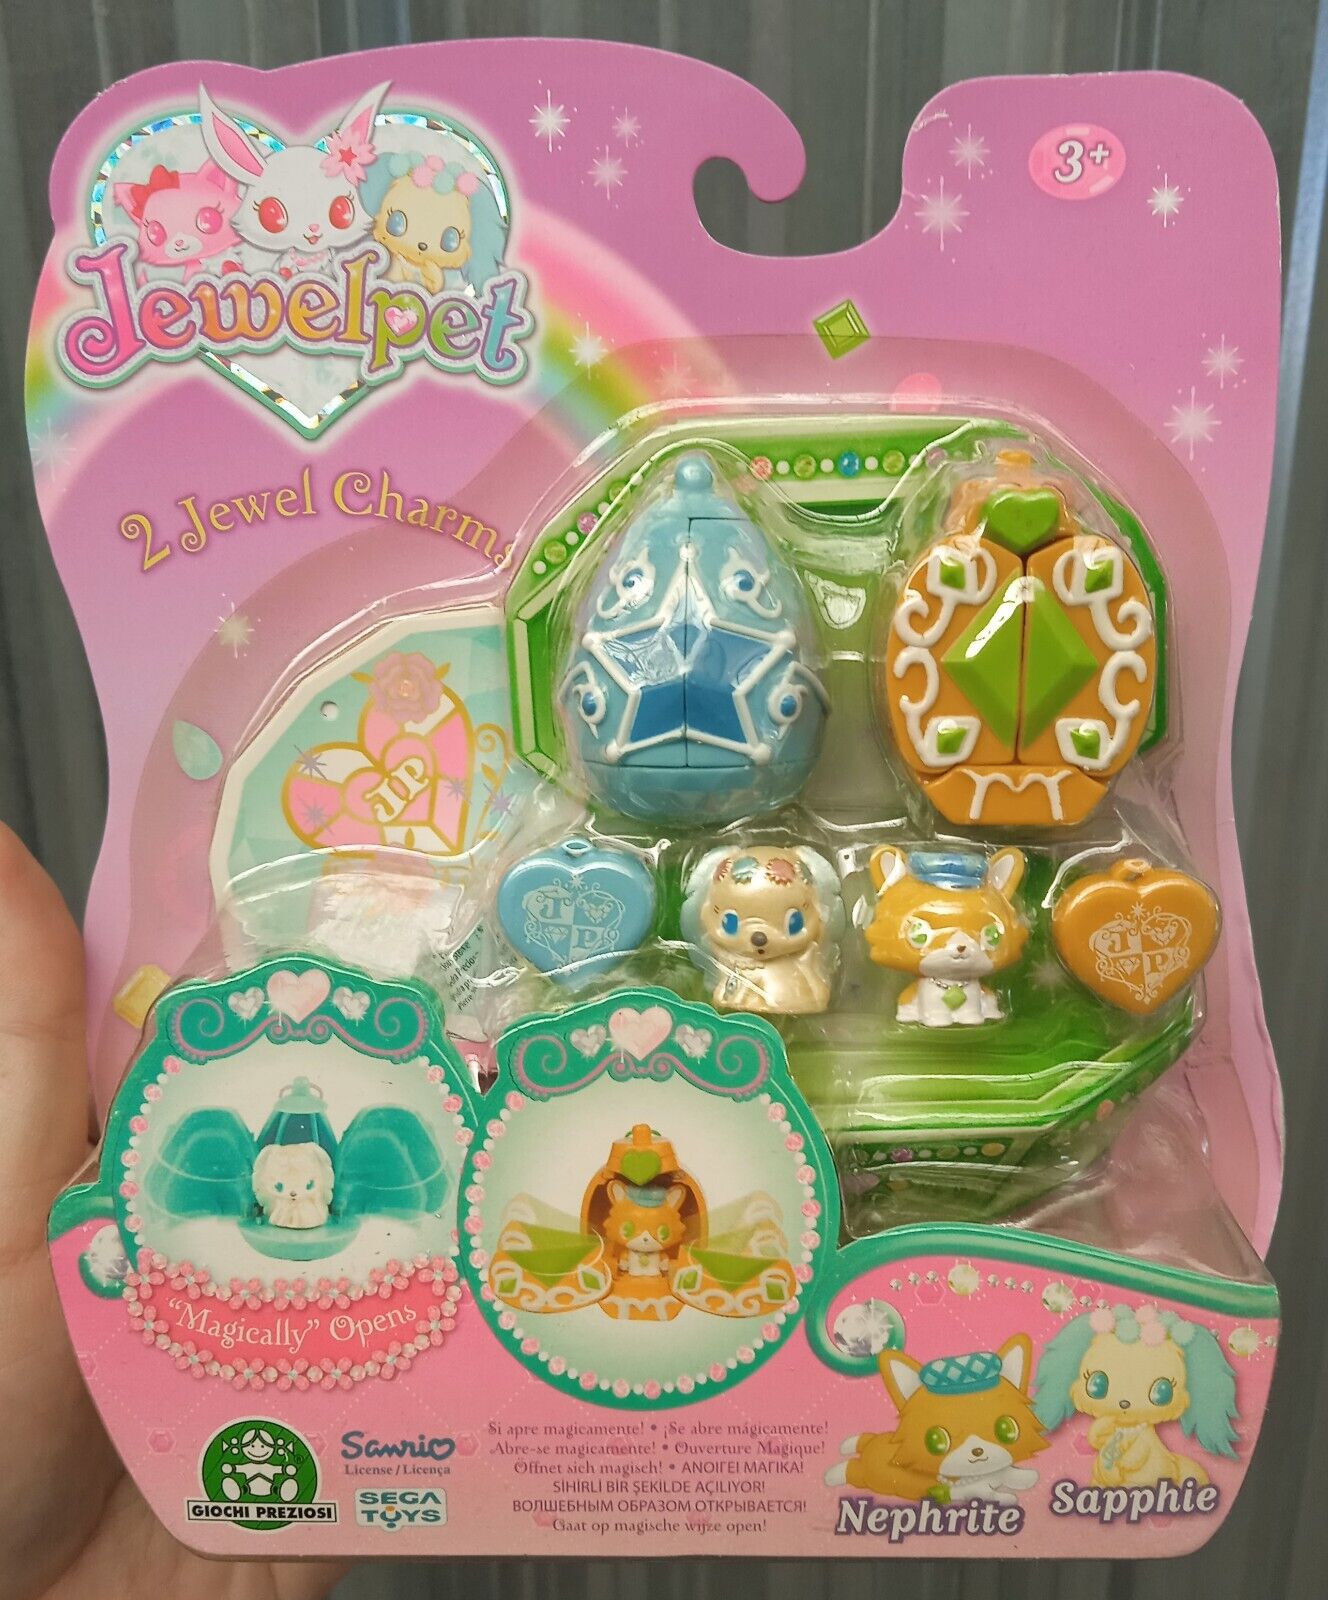 Jewelpet 2x Jewel Charms Pack Nephrite & Sapphie Figures Sanrio Sega Toys 2010